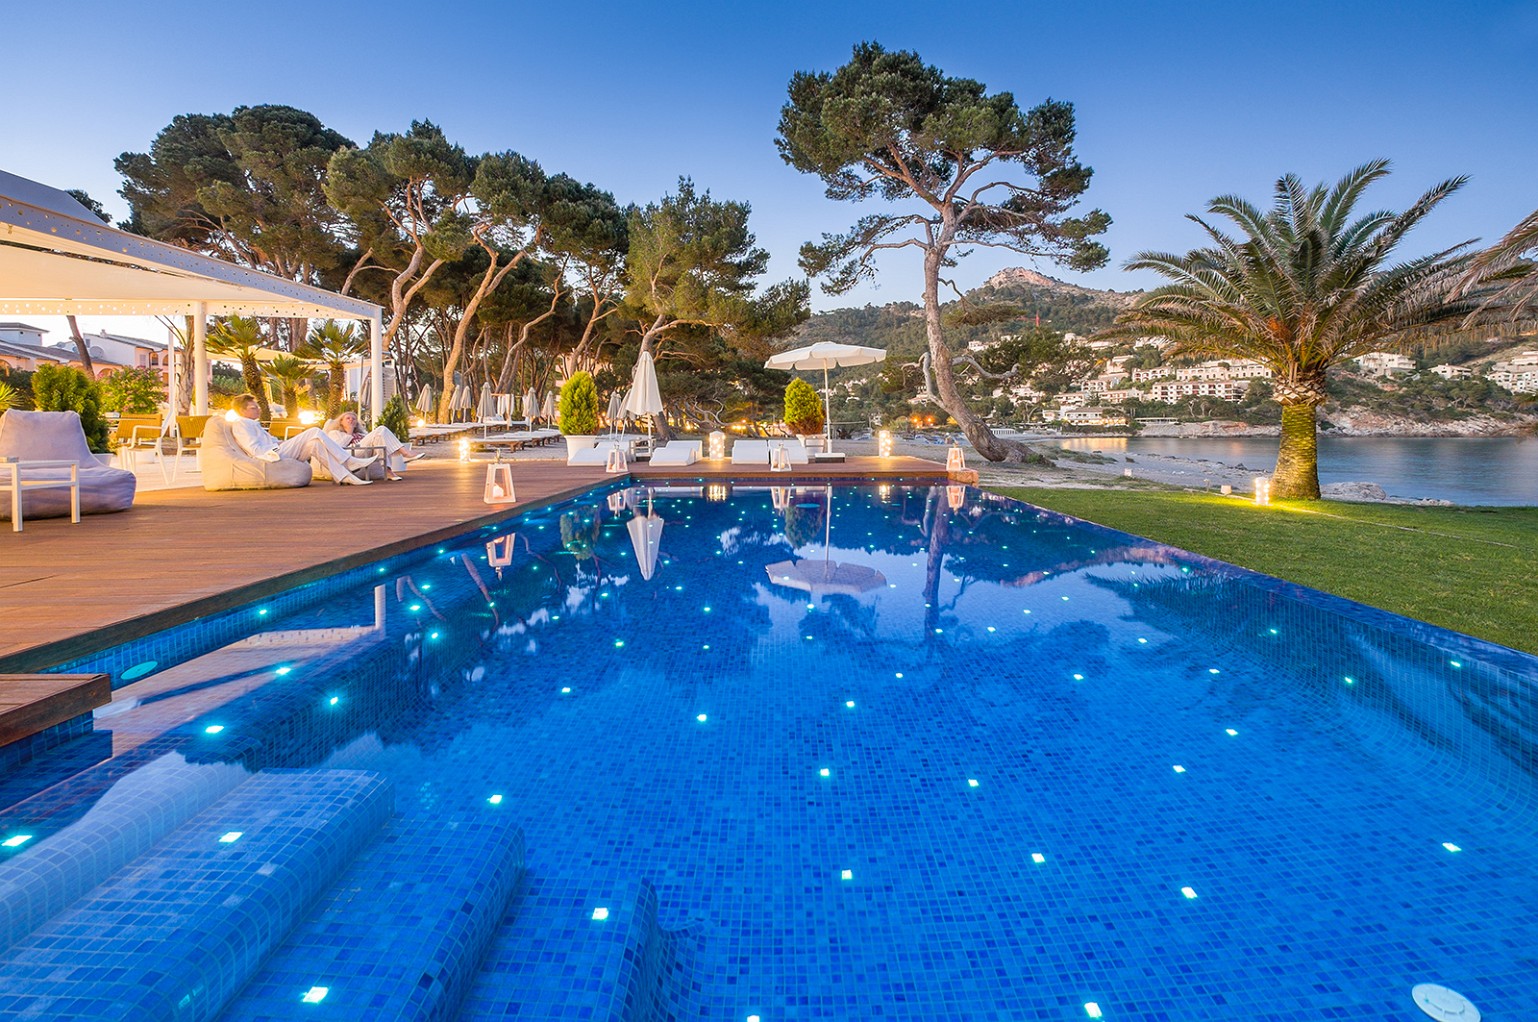 Canyamel_Hotel_Pool-Abend_0725_X-T1_5,6_10mm_1-2,3s_200-ISO_Mallorca-HDR_LR61_OCSj_web